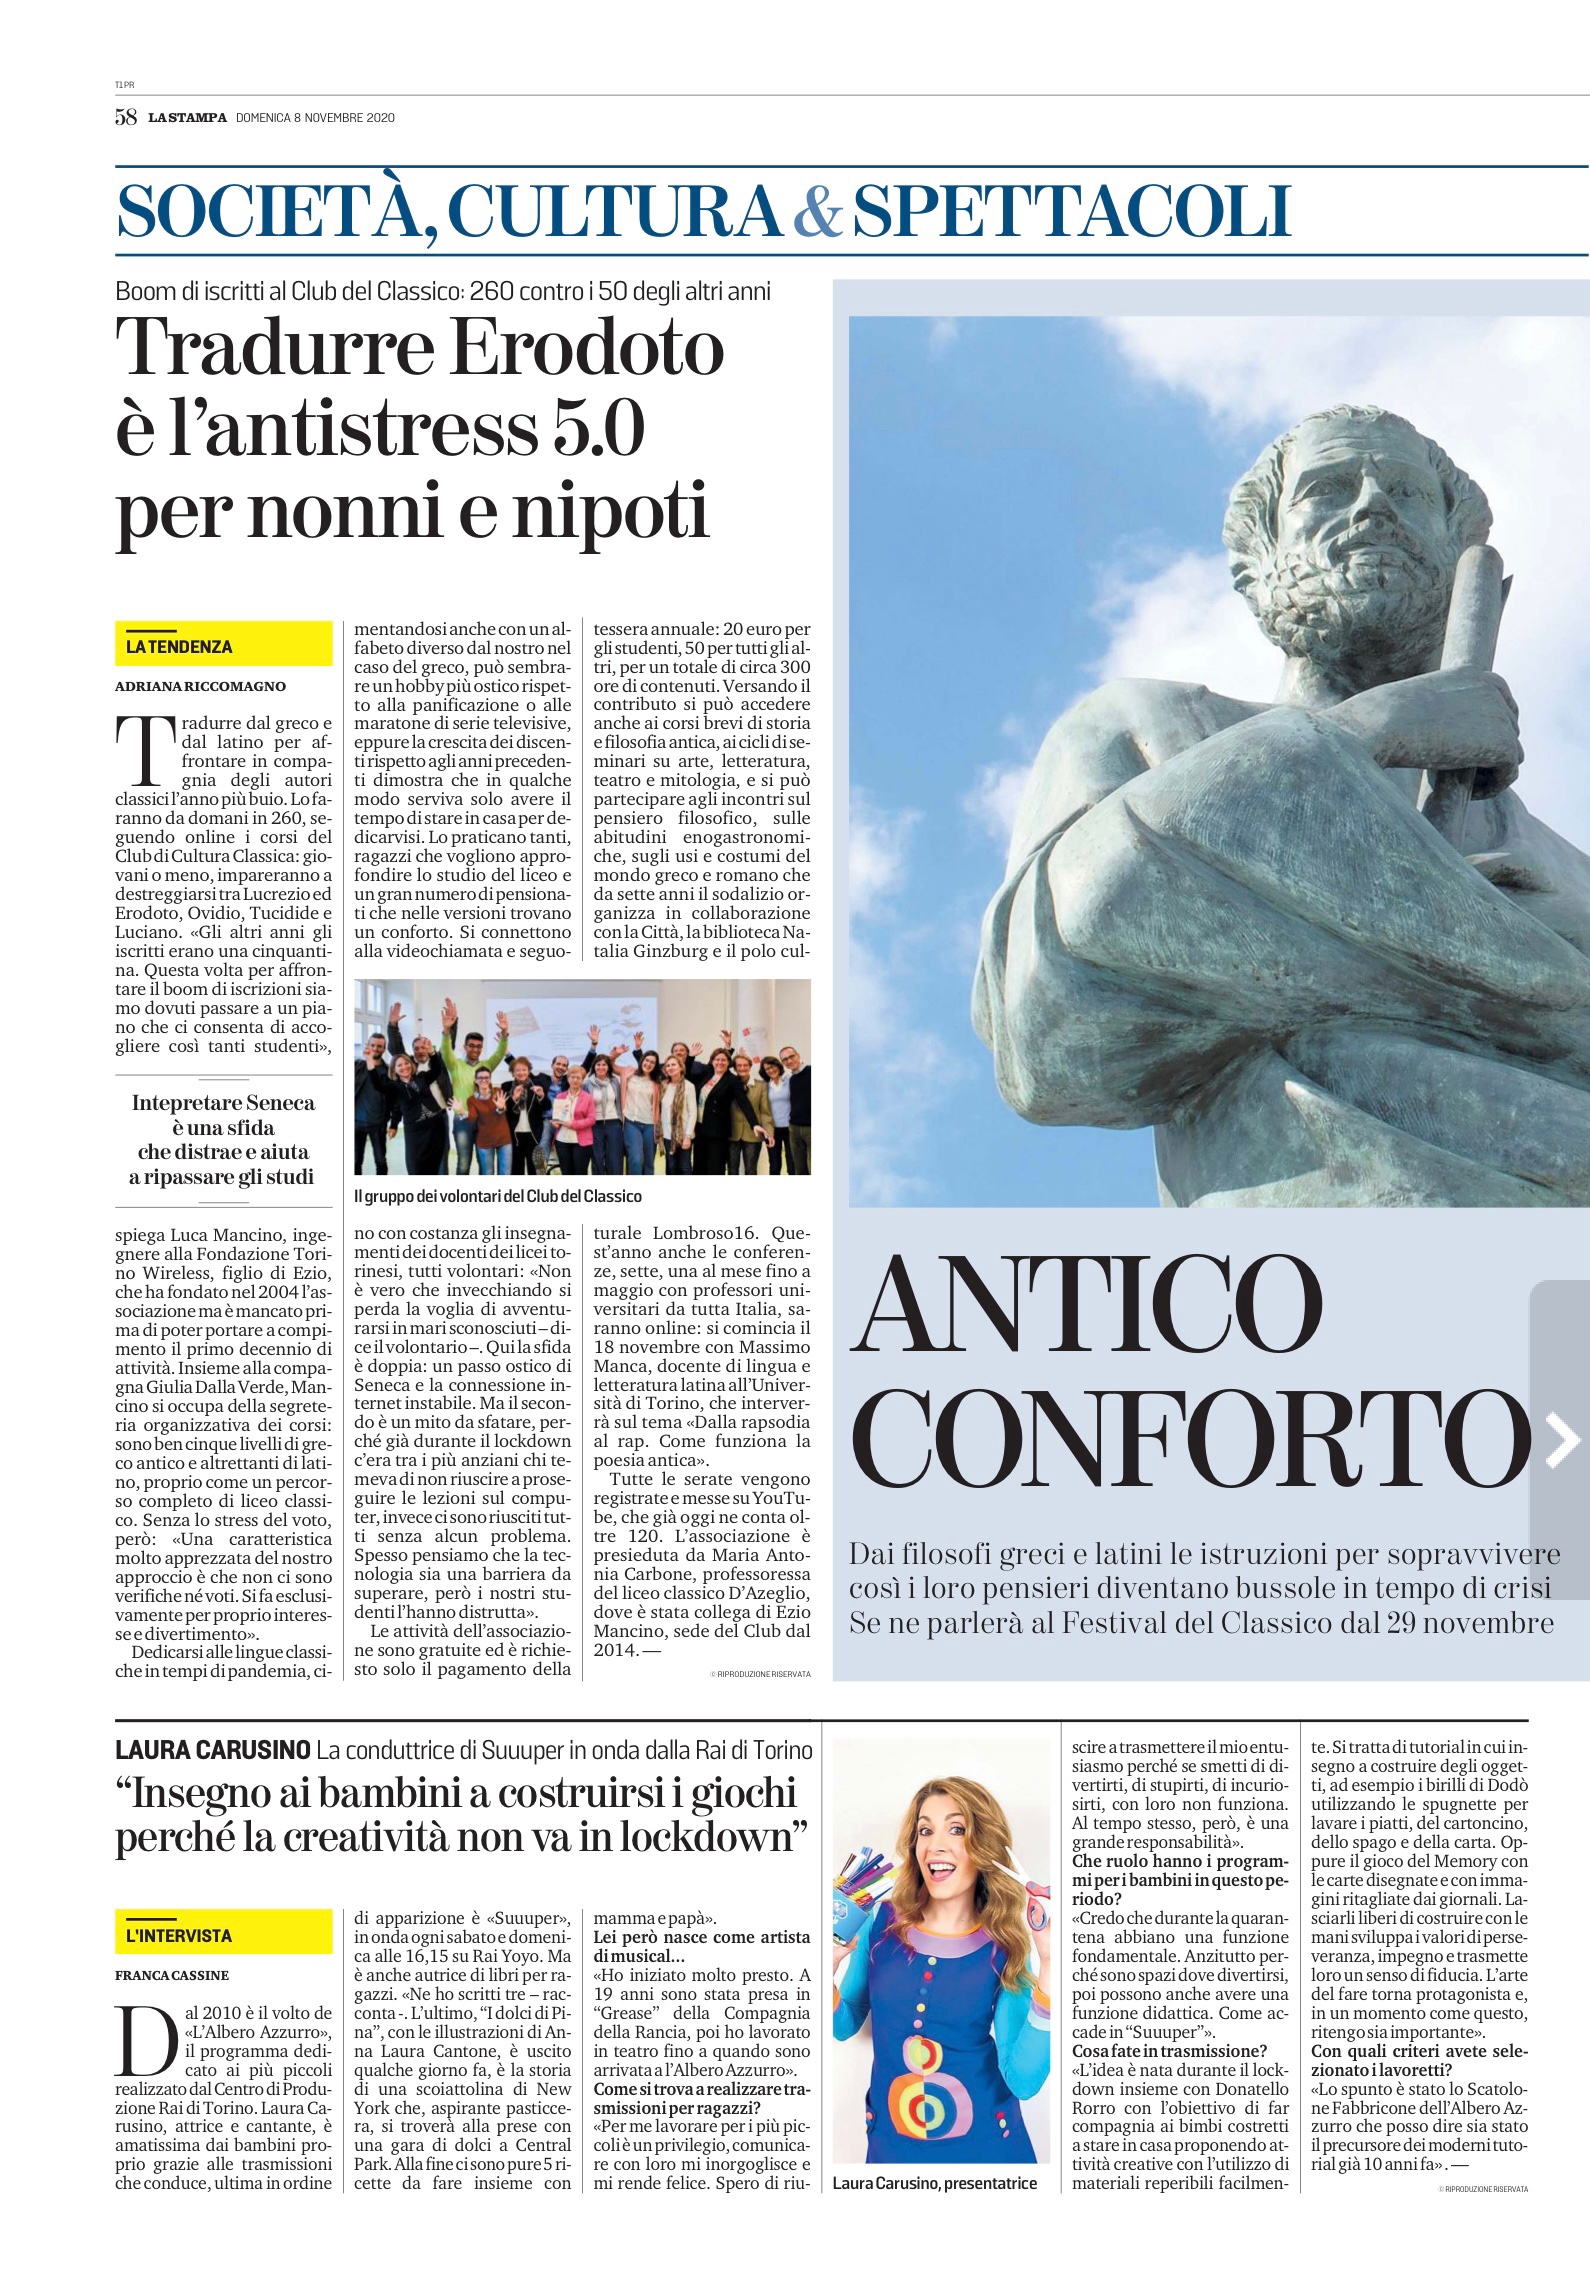 La Stampa, (58), 8.11.2020